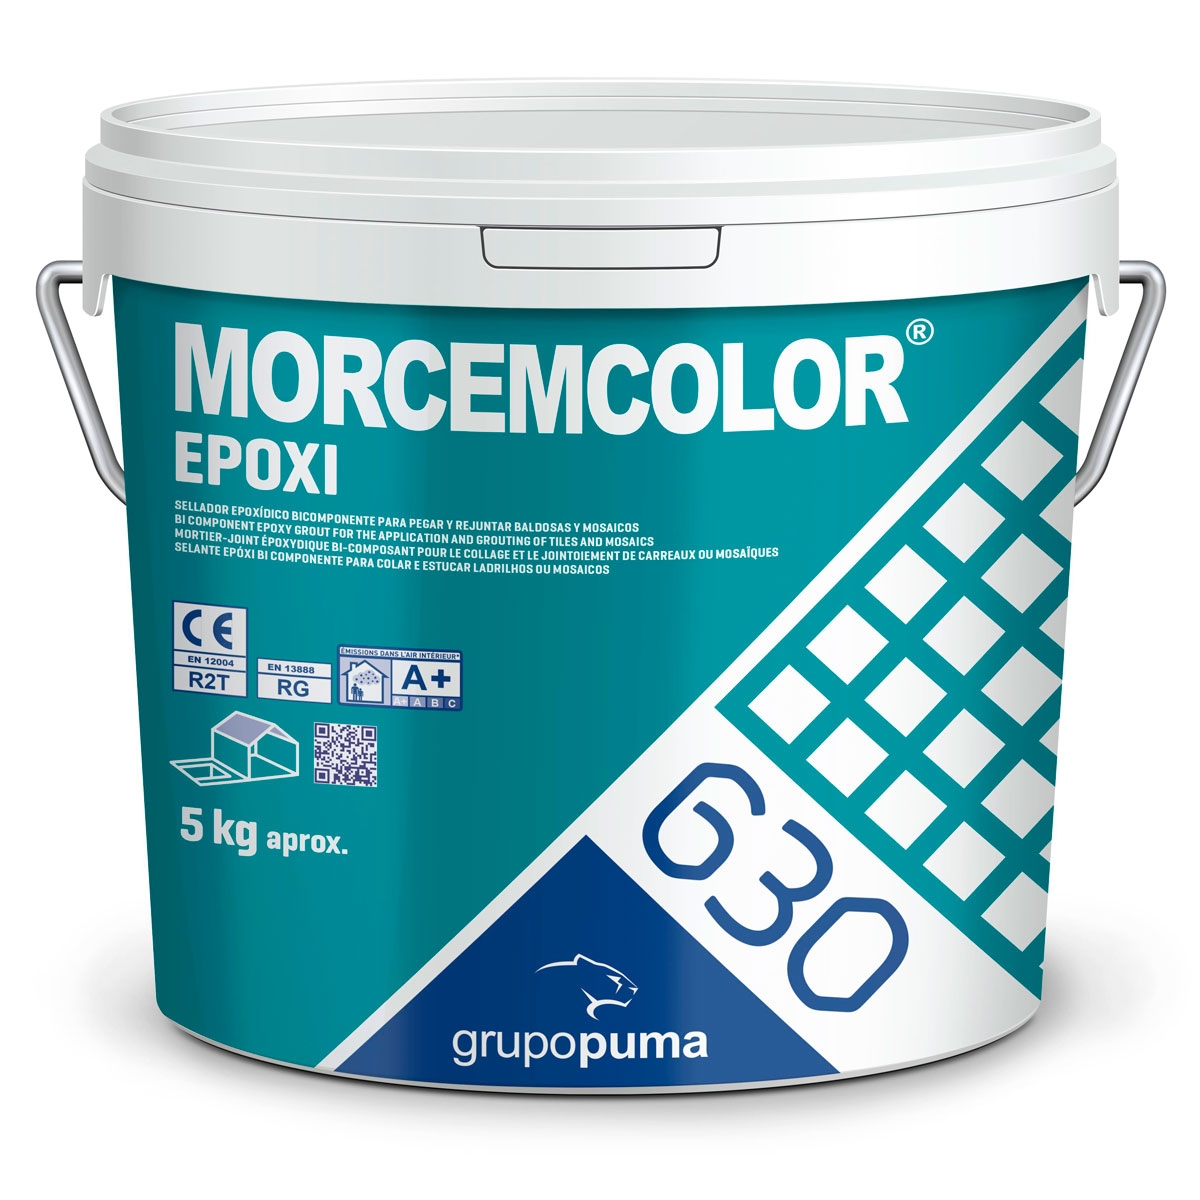 Morcemcolor Epoxy RG 5 Kg Branco - Puma Group